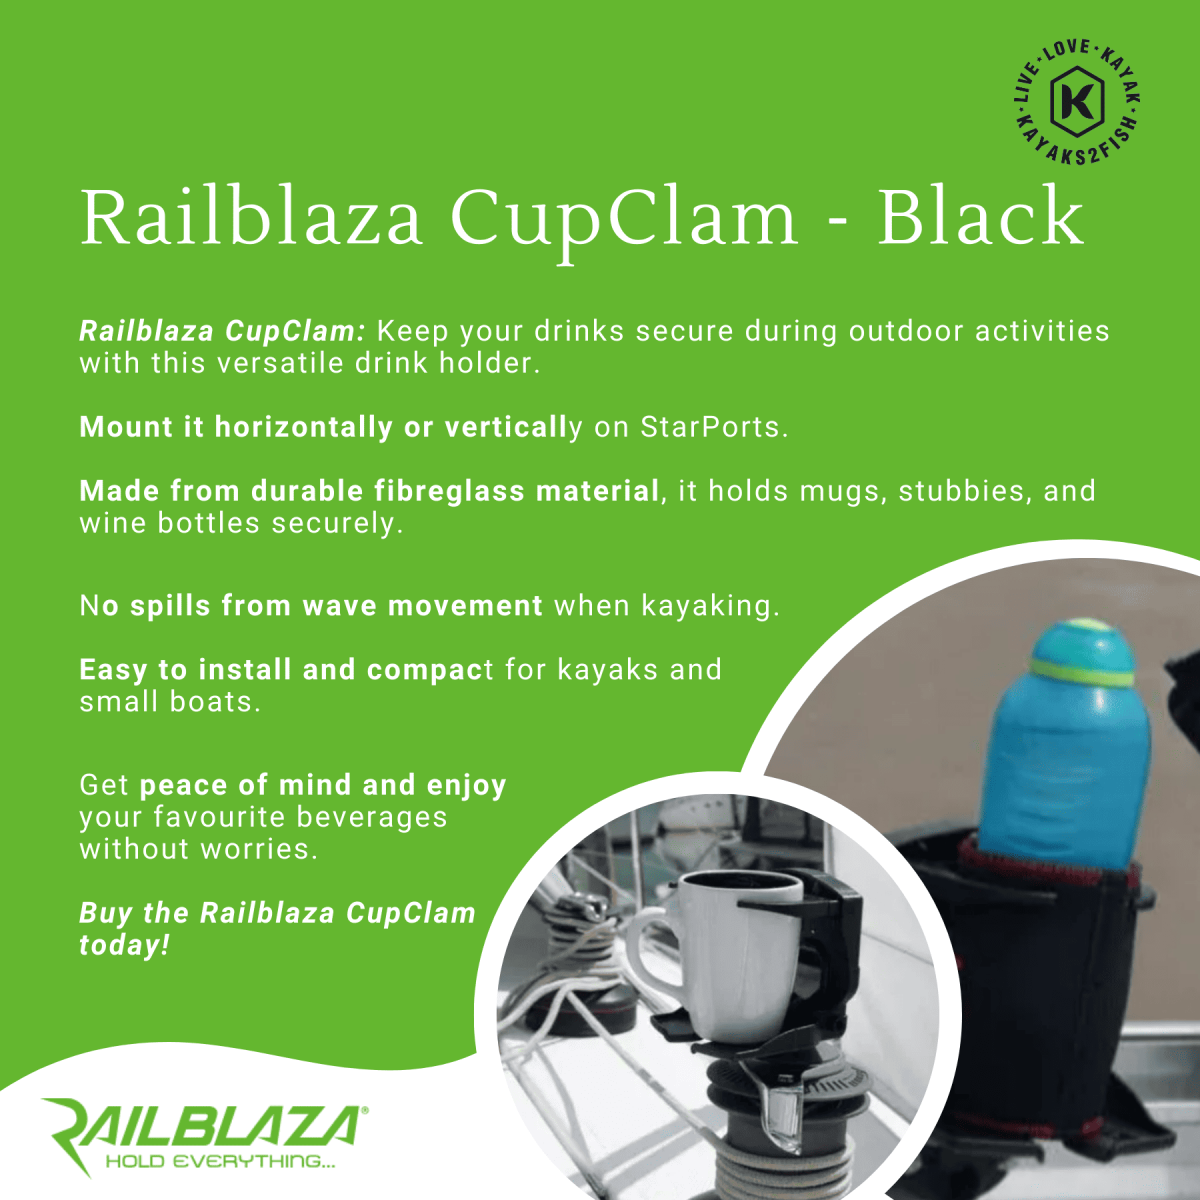 Railblaza CupClam - Black